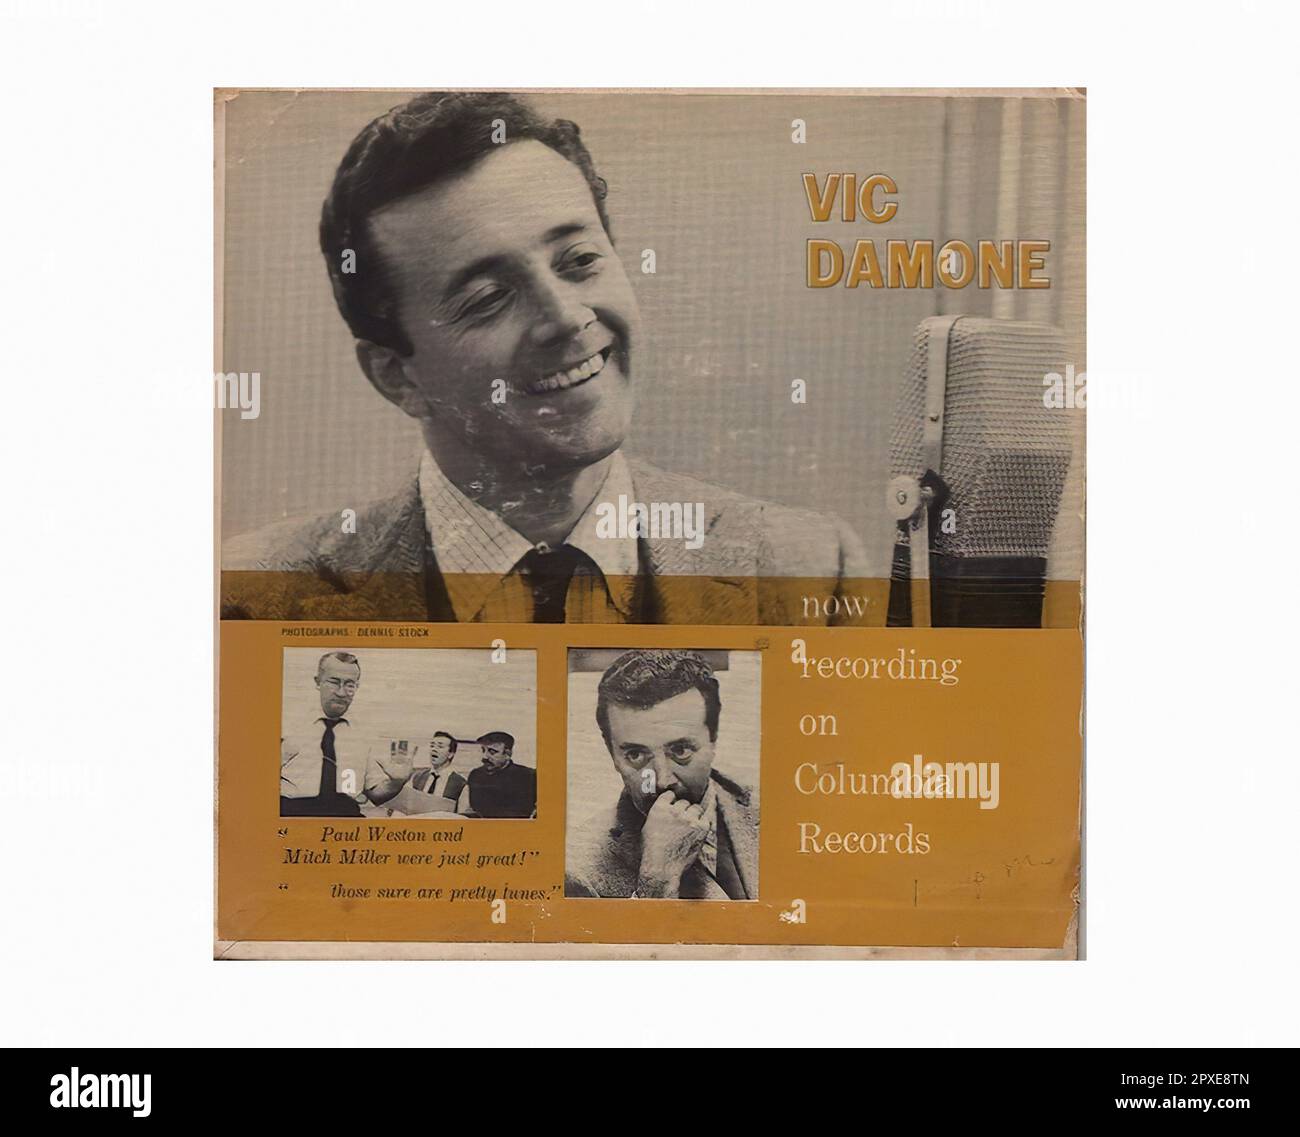 Damone Vic - 1956 01 A - Vintage 45 R.P.M Music Vinyl Record Stock Photo